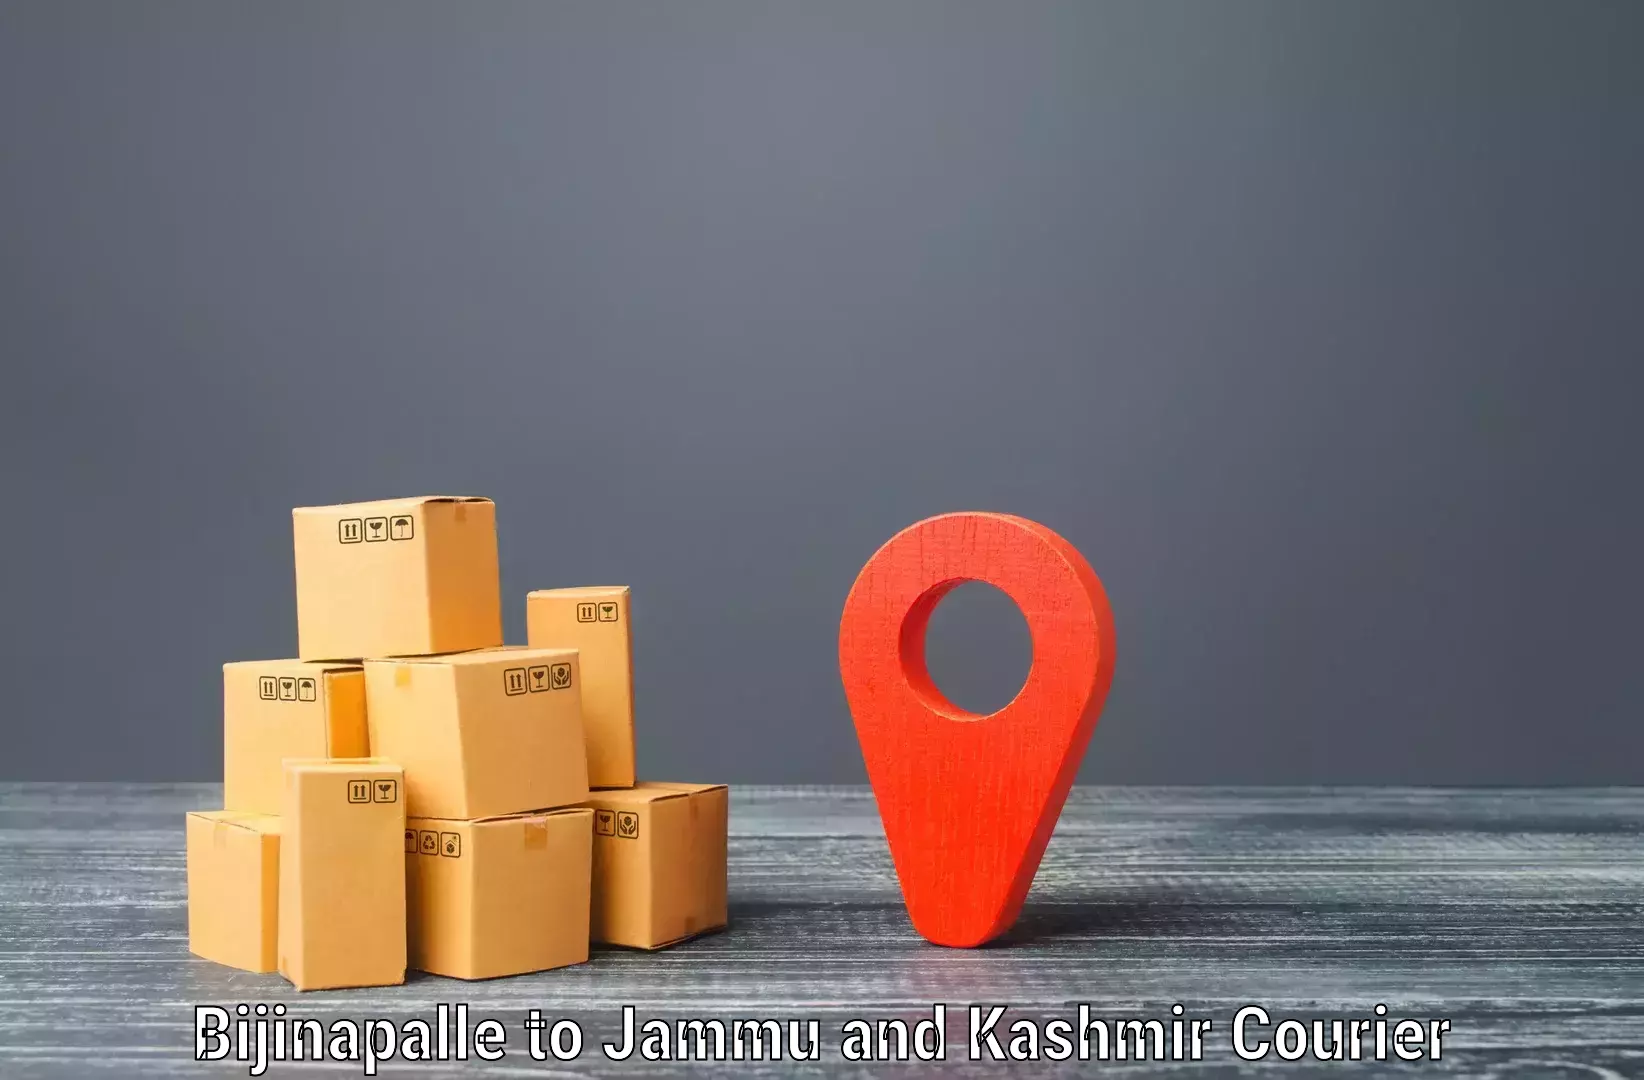 Modern courier technology Bijinapalle to Ramban